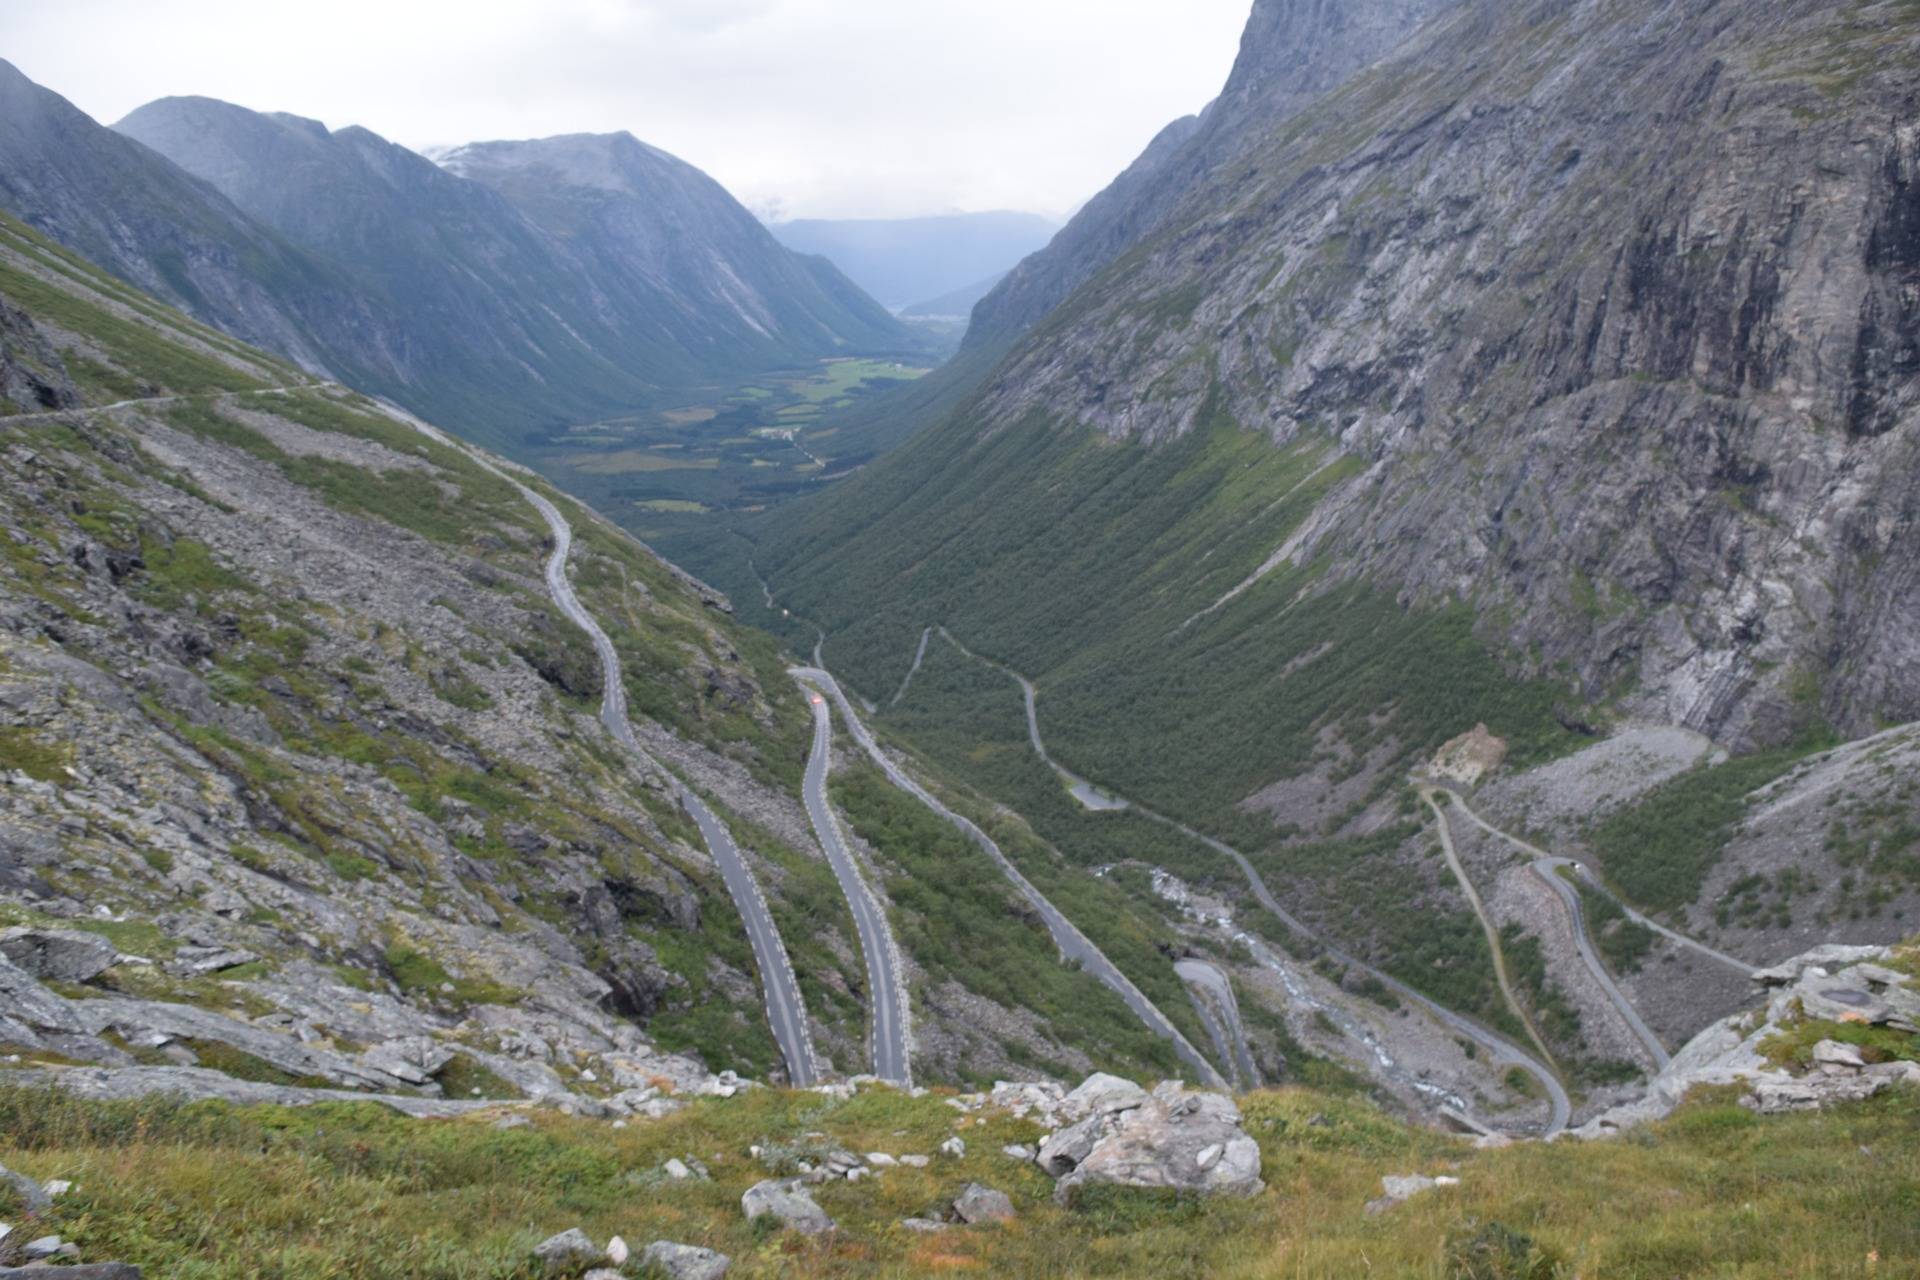 Intense mountain pass with 11 hairpins - Trollstigen, Norway